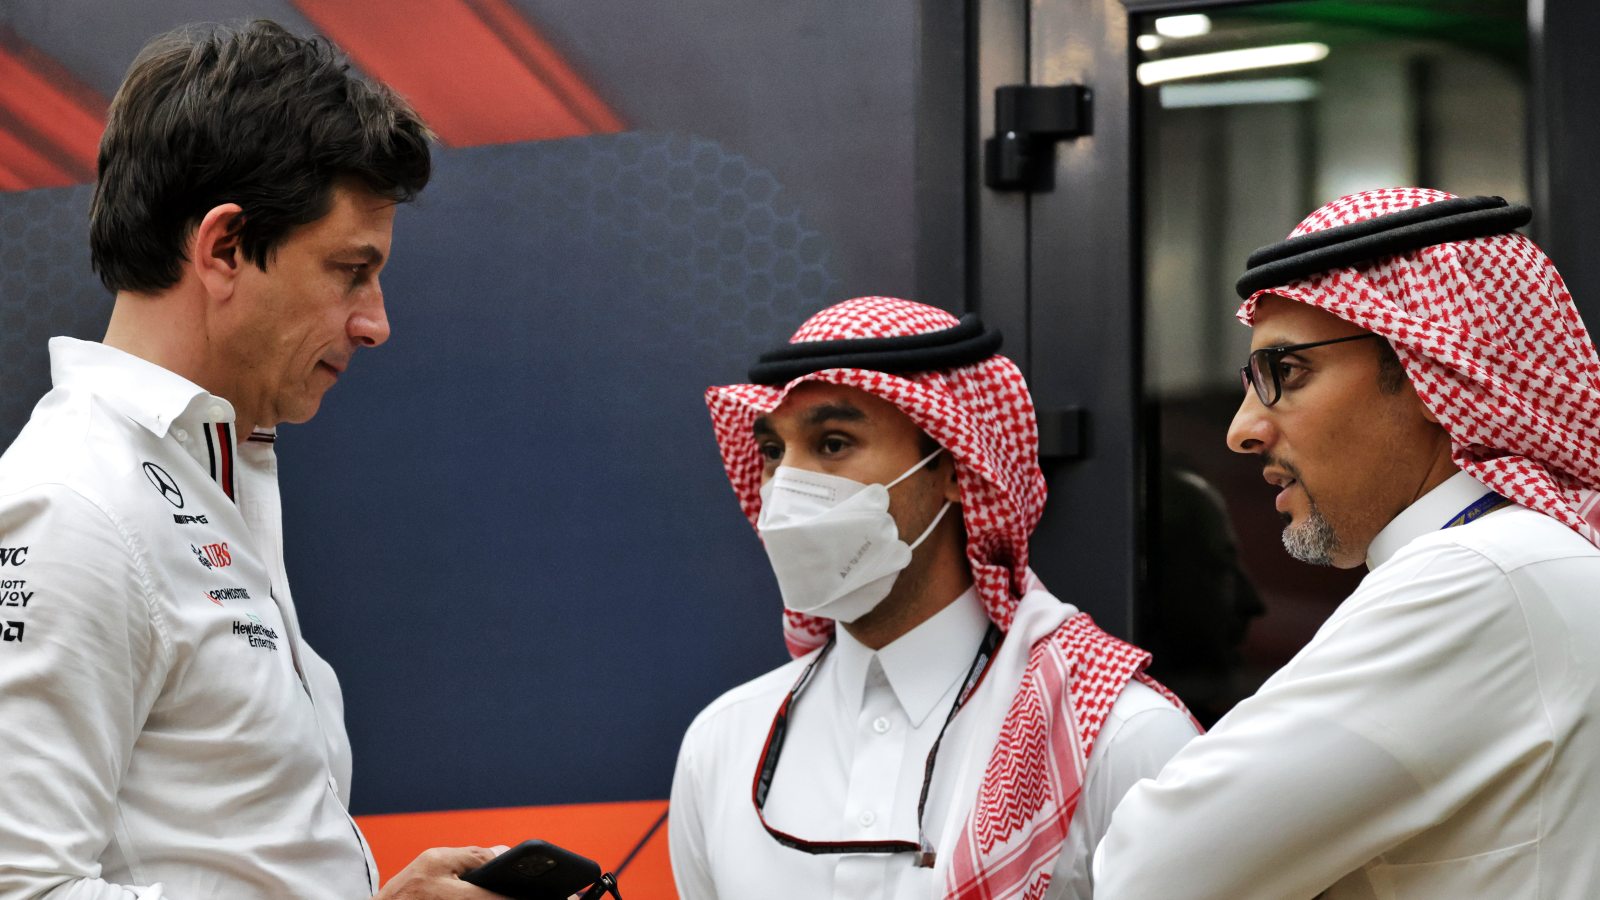 Toto Wolff speaking during the Saudi Arabian Grand Prix. Saudi Arabia, March 2022.